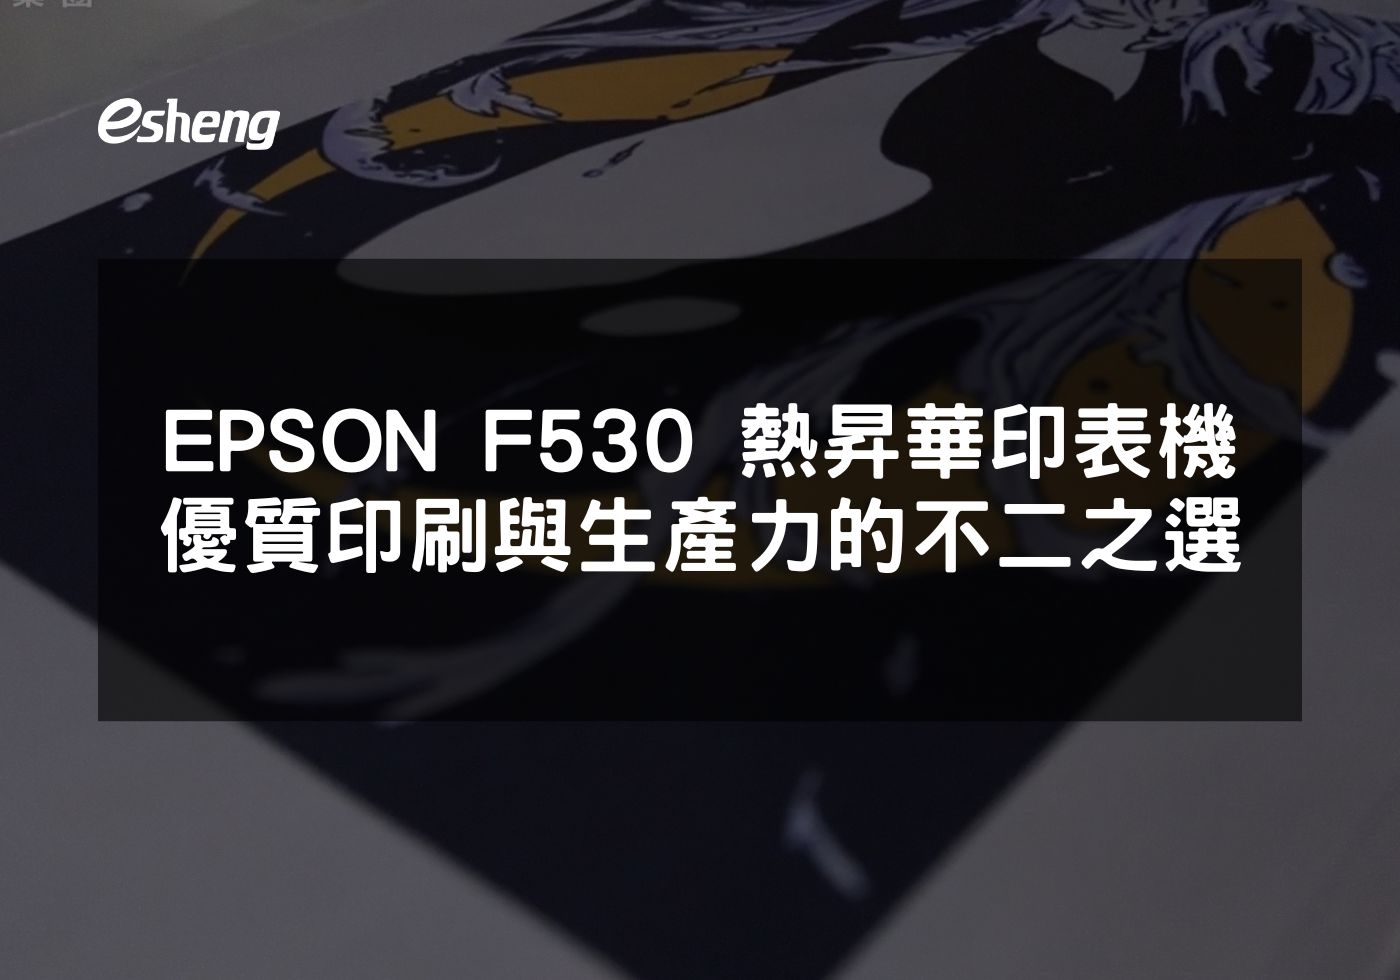 選擇EPSON F530為企業印刷解決方案